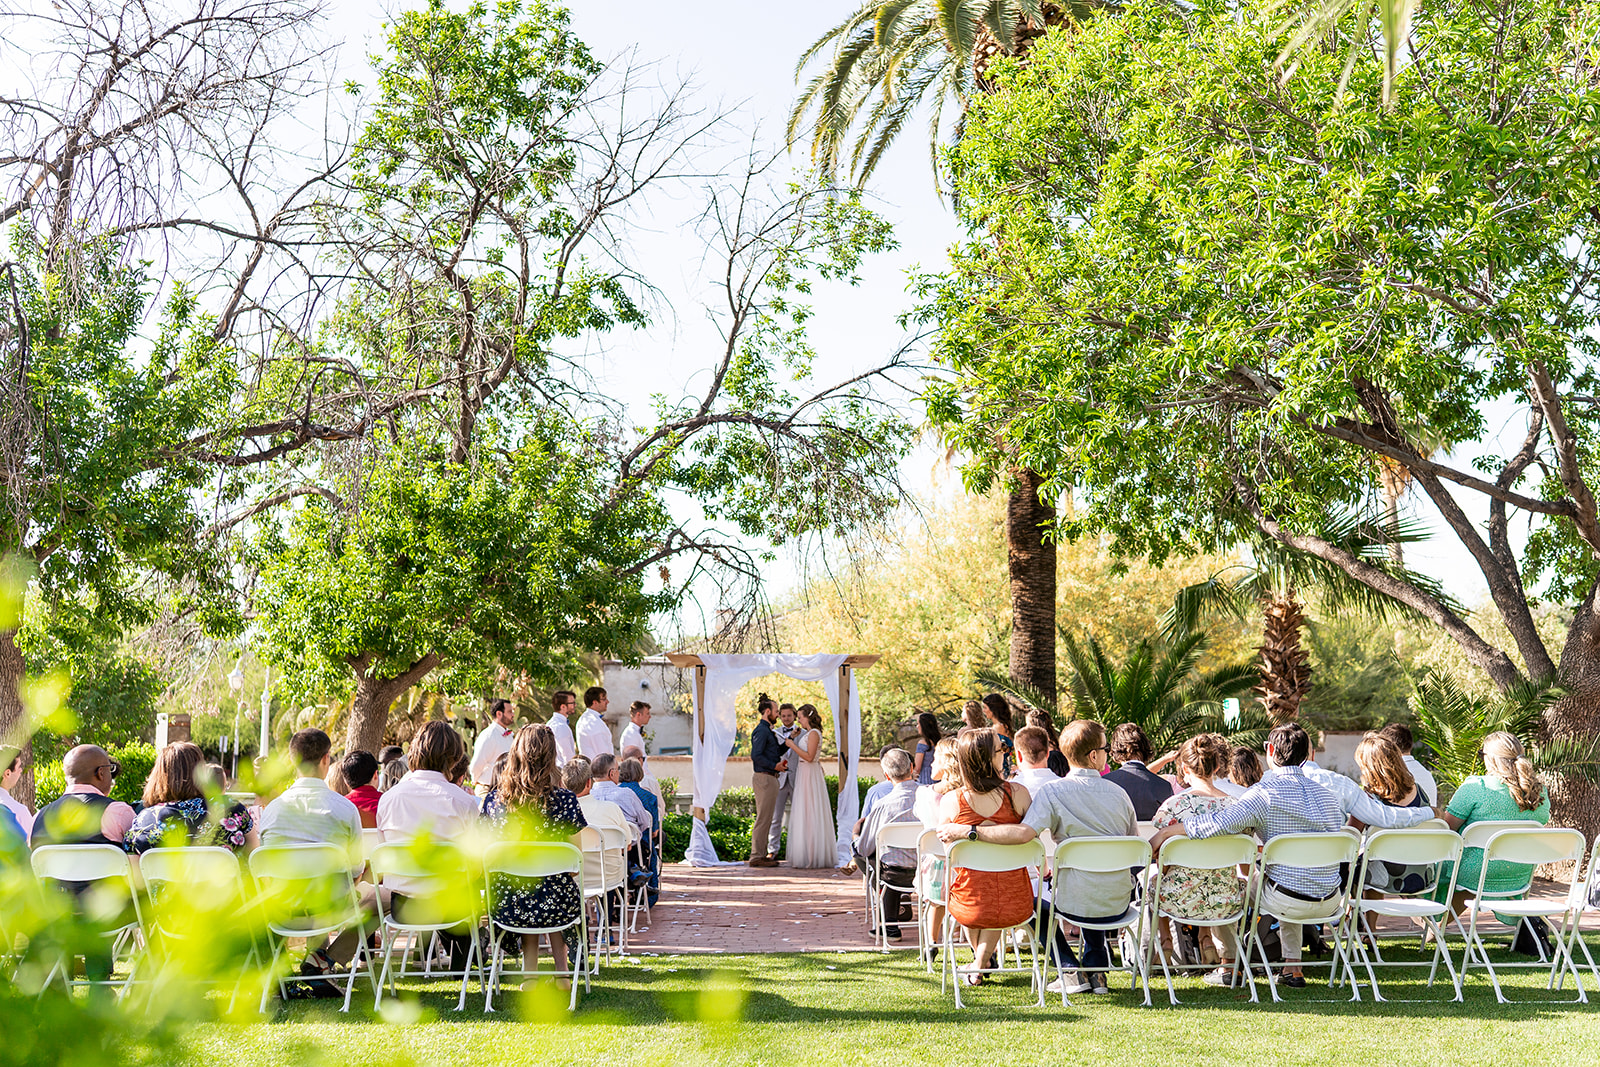 tucson museum of art wedding ceremony outdoors